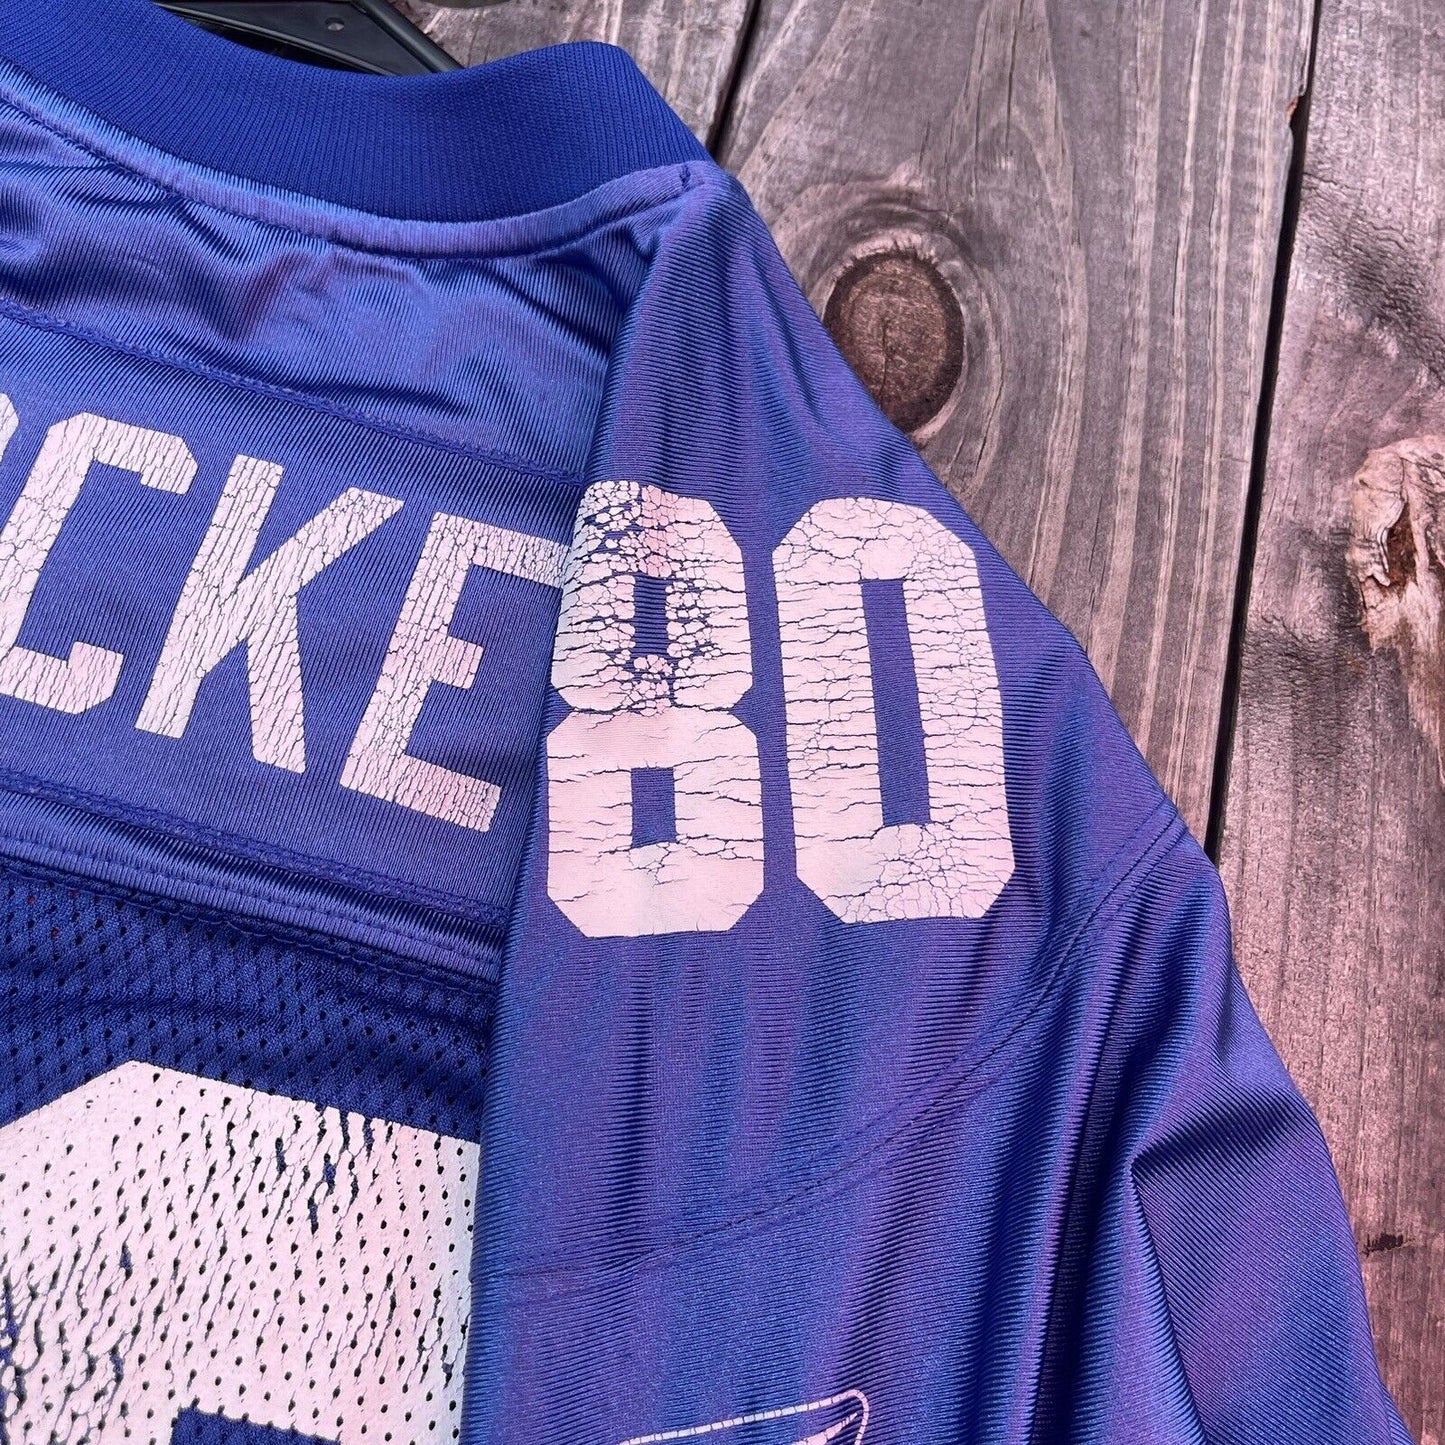 New York Giants Jersey Mens Medium Blue Shockey #80 Reebok NFL Football